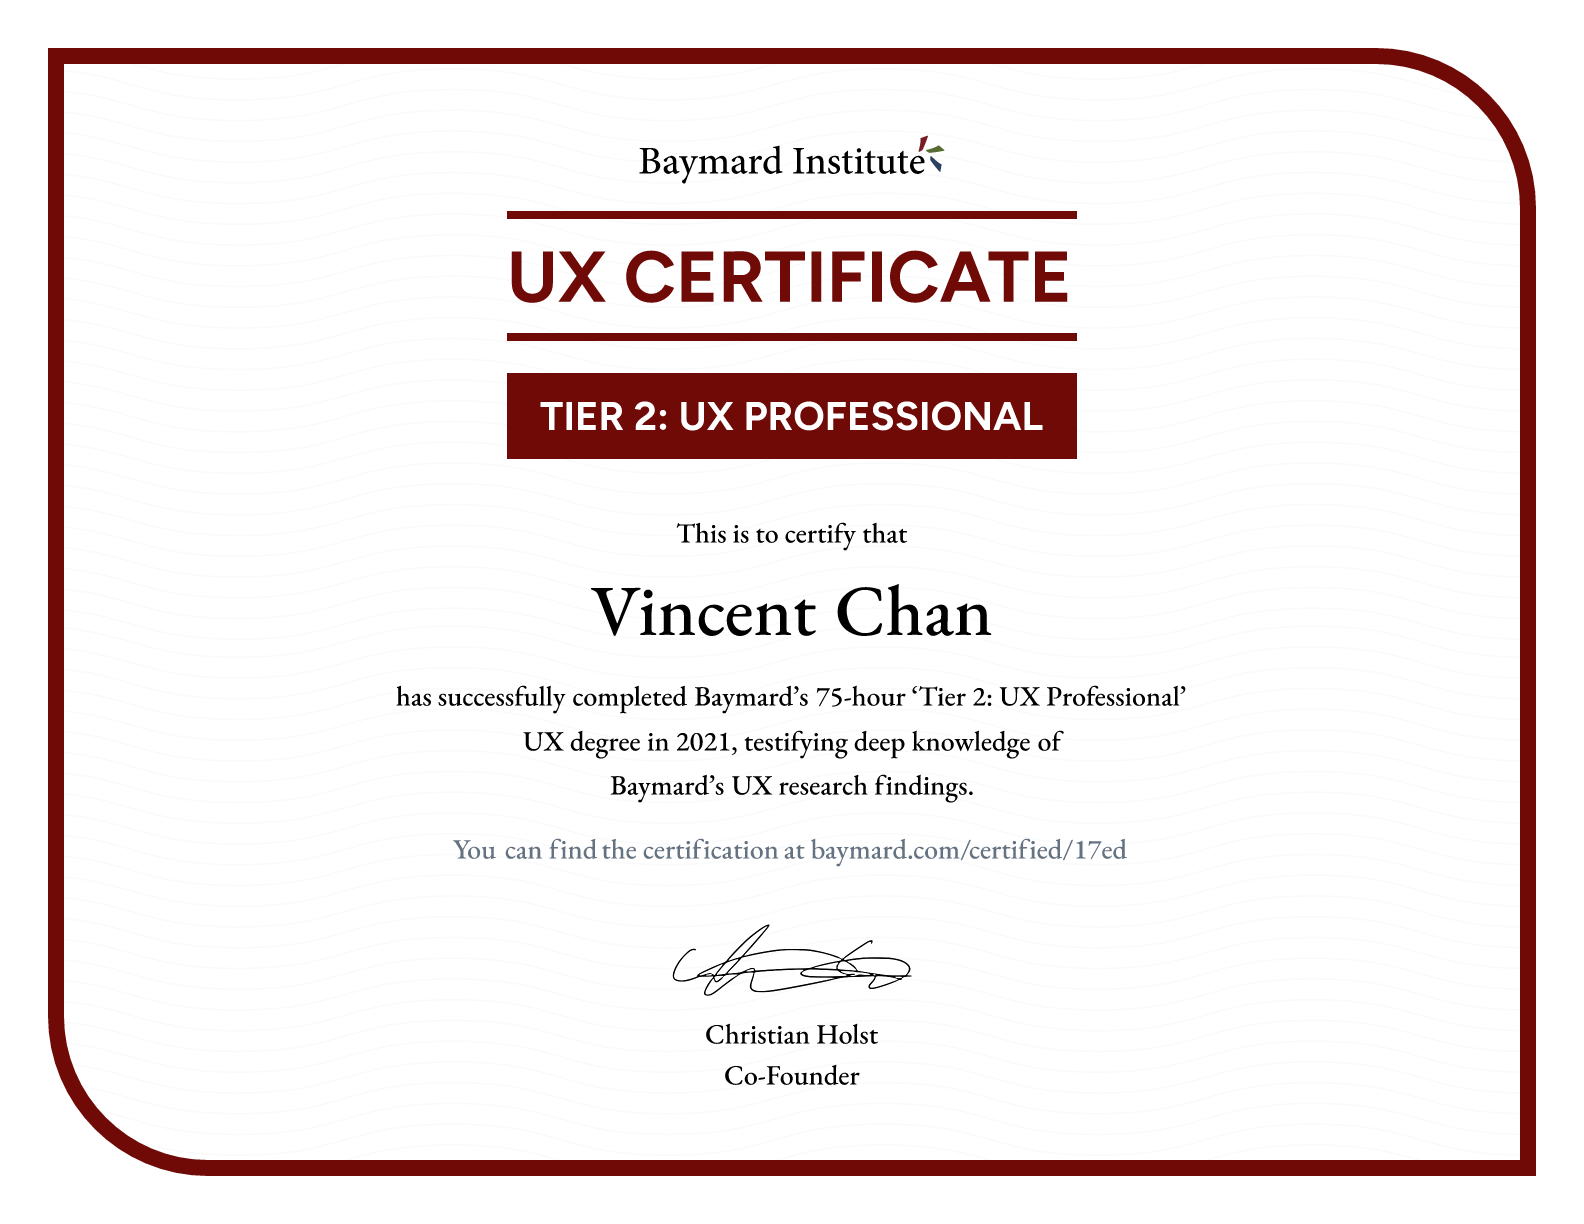 Vincent Chan’s certificate